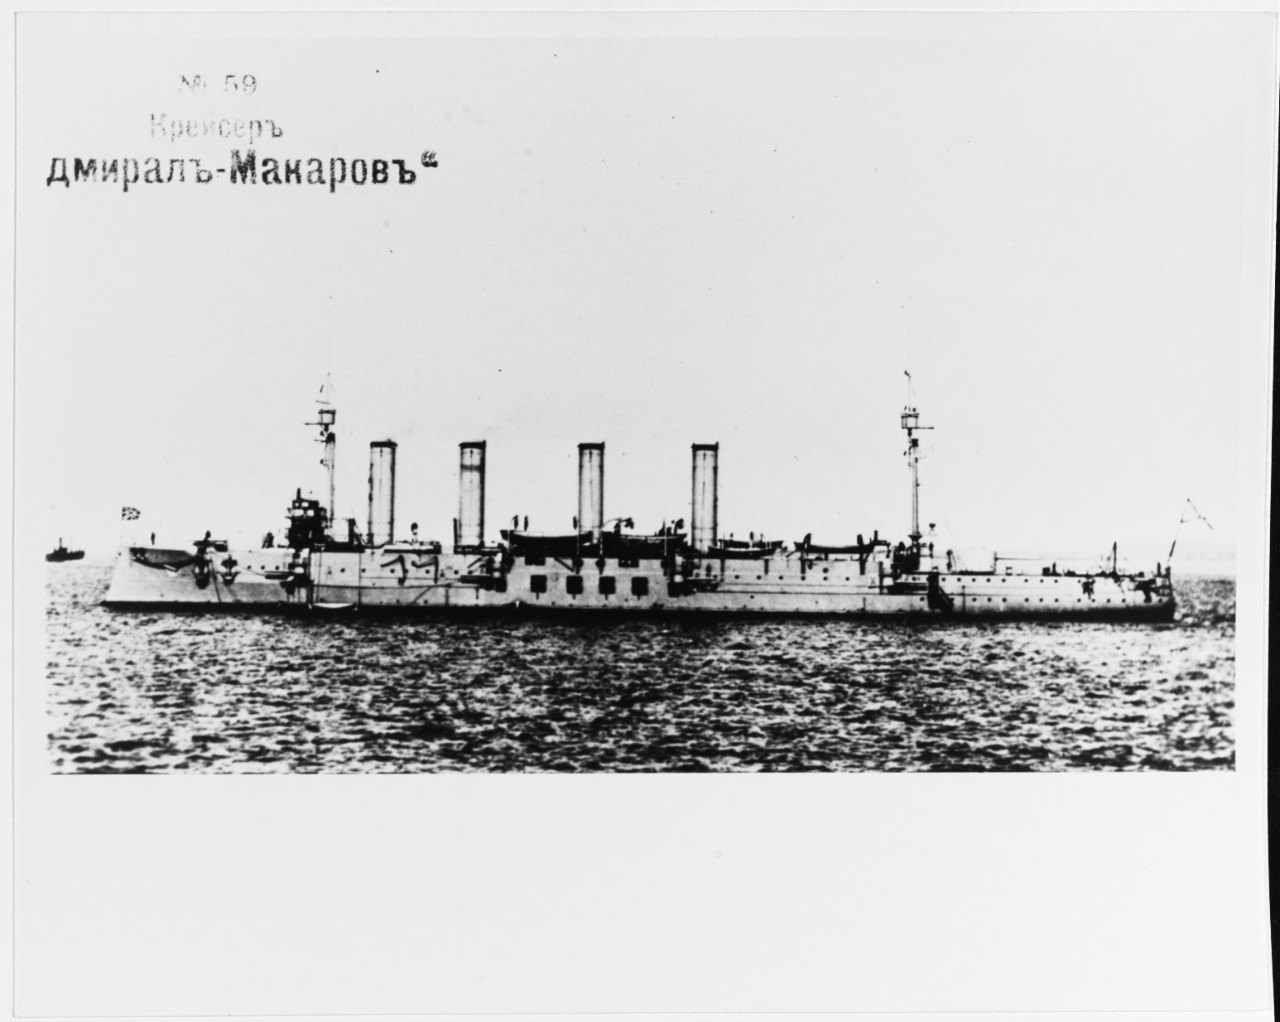 ADMIRAL MAKAROV (Russian Armored Cruiser)